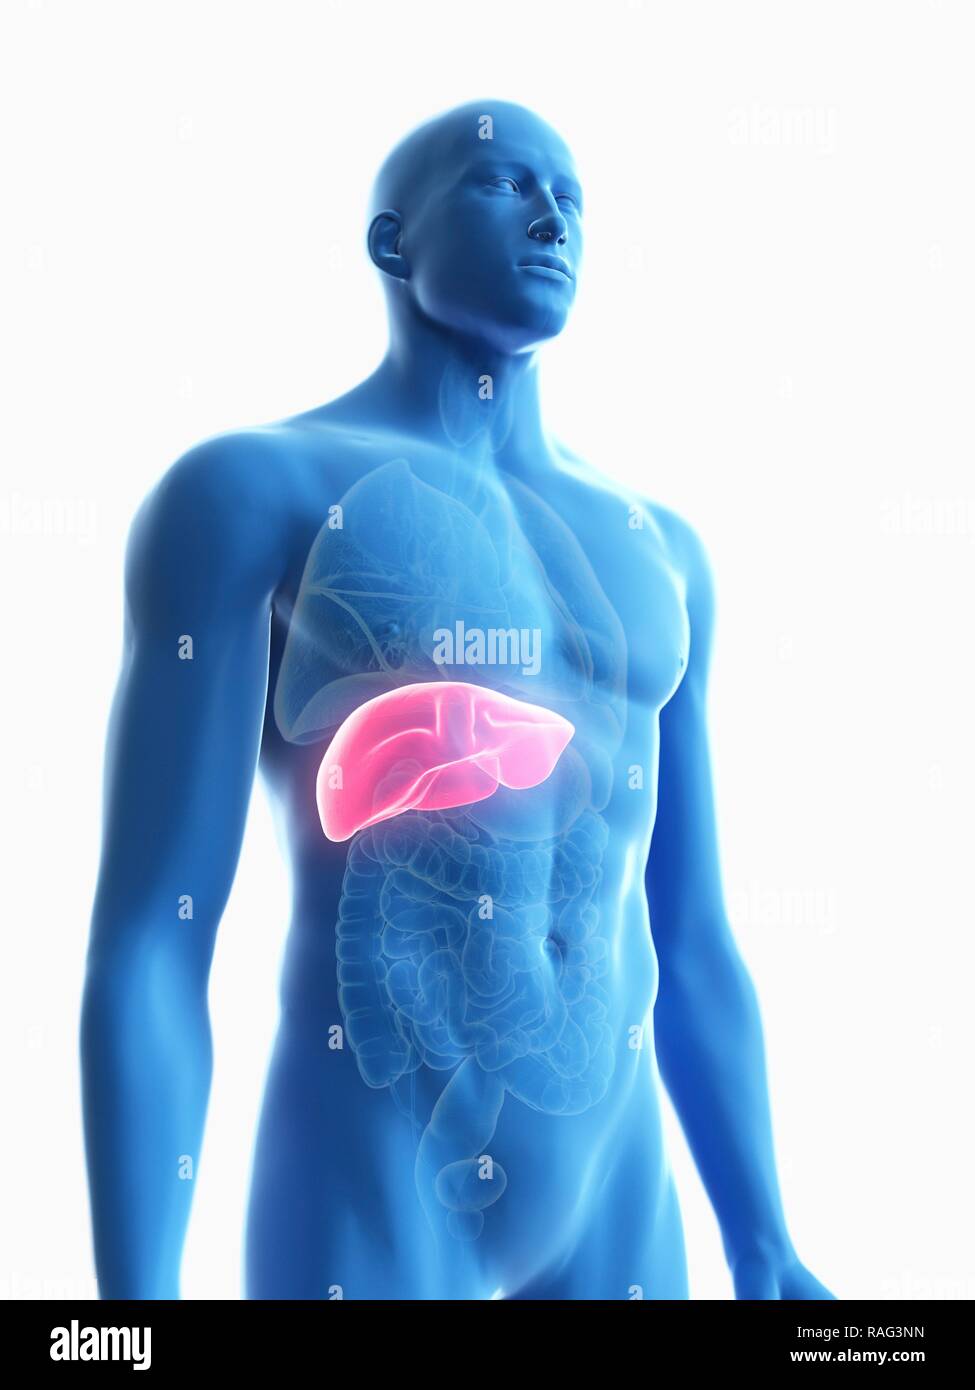 Illustration of a man's liver Stock Photo - Alamy